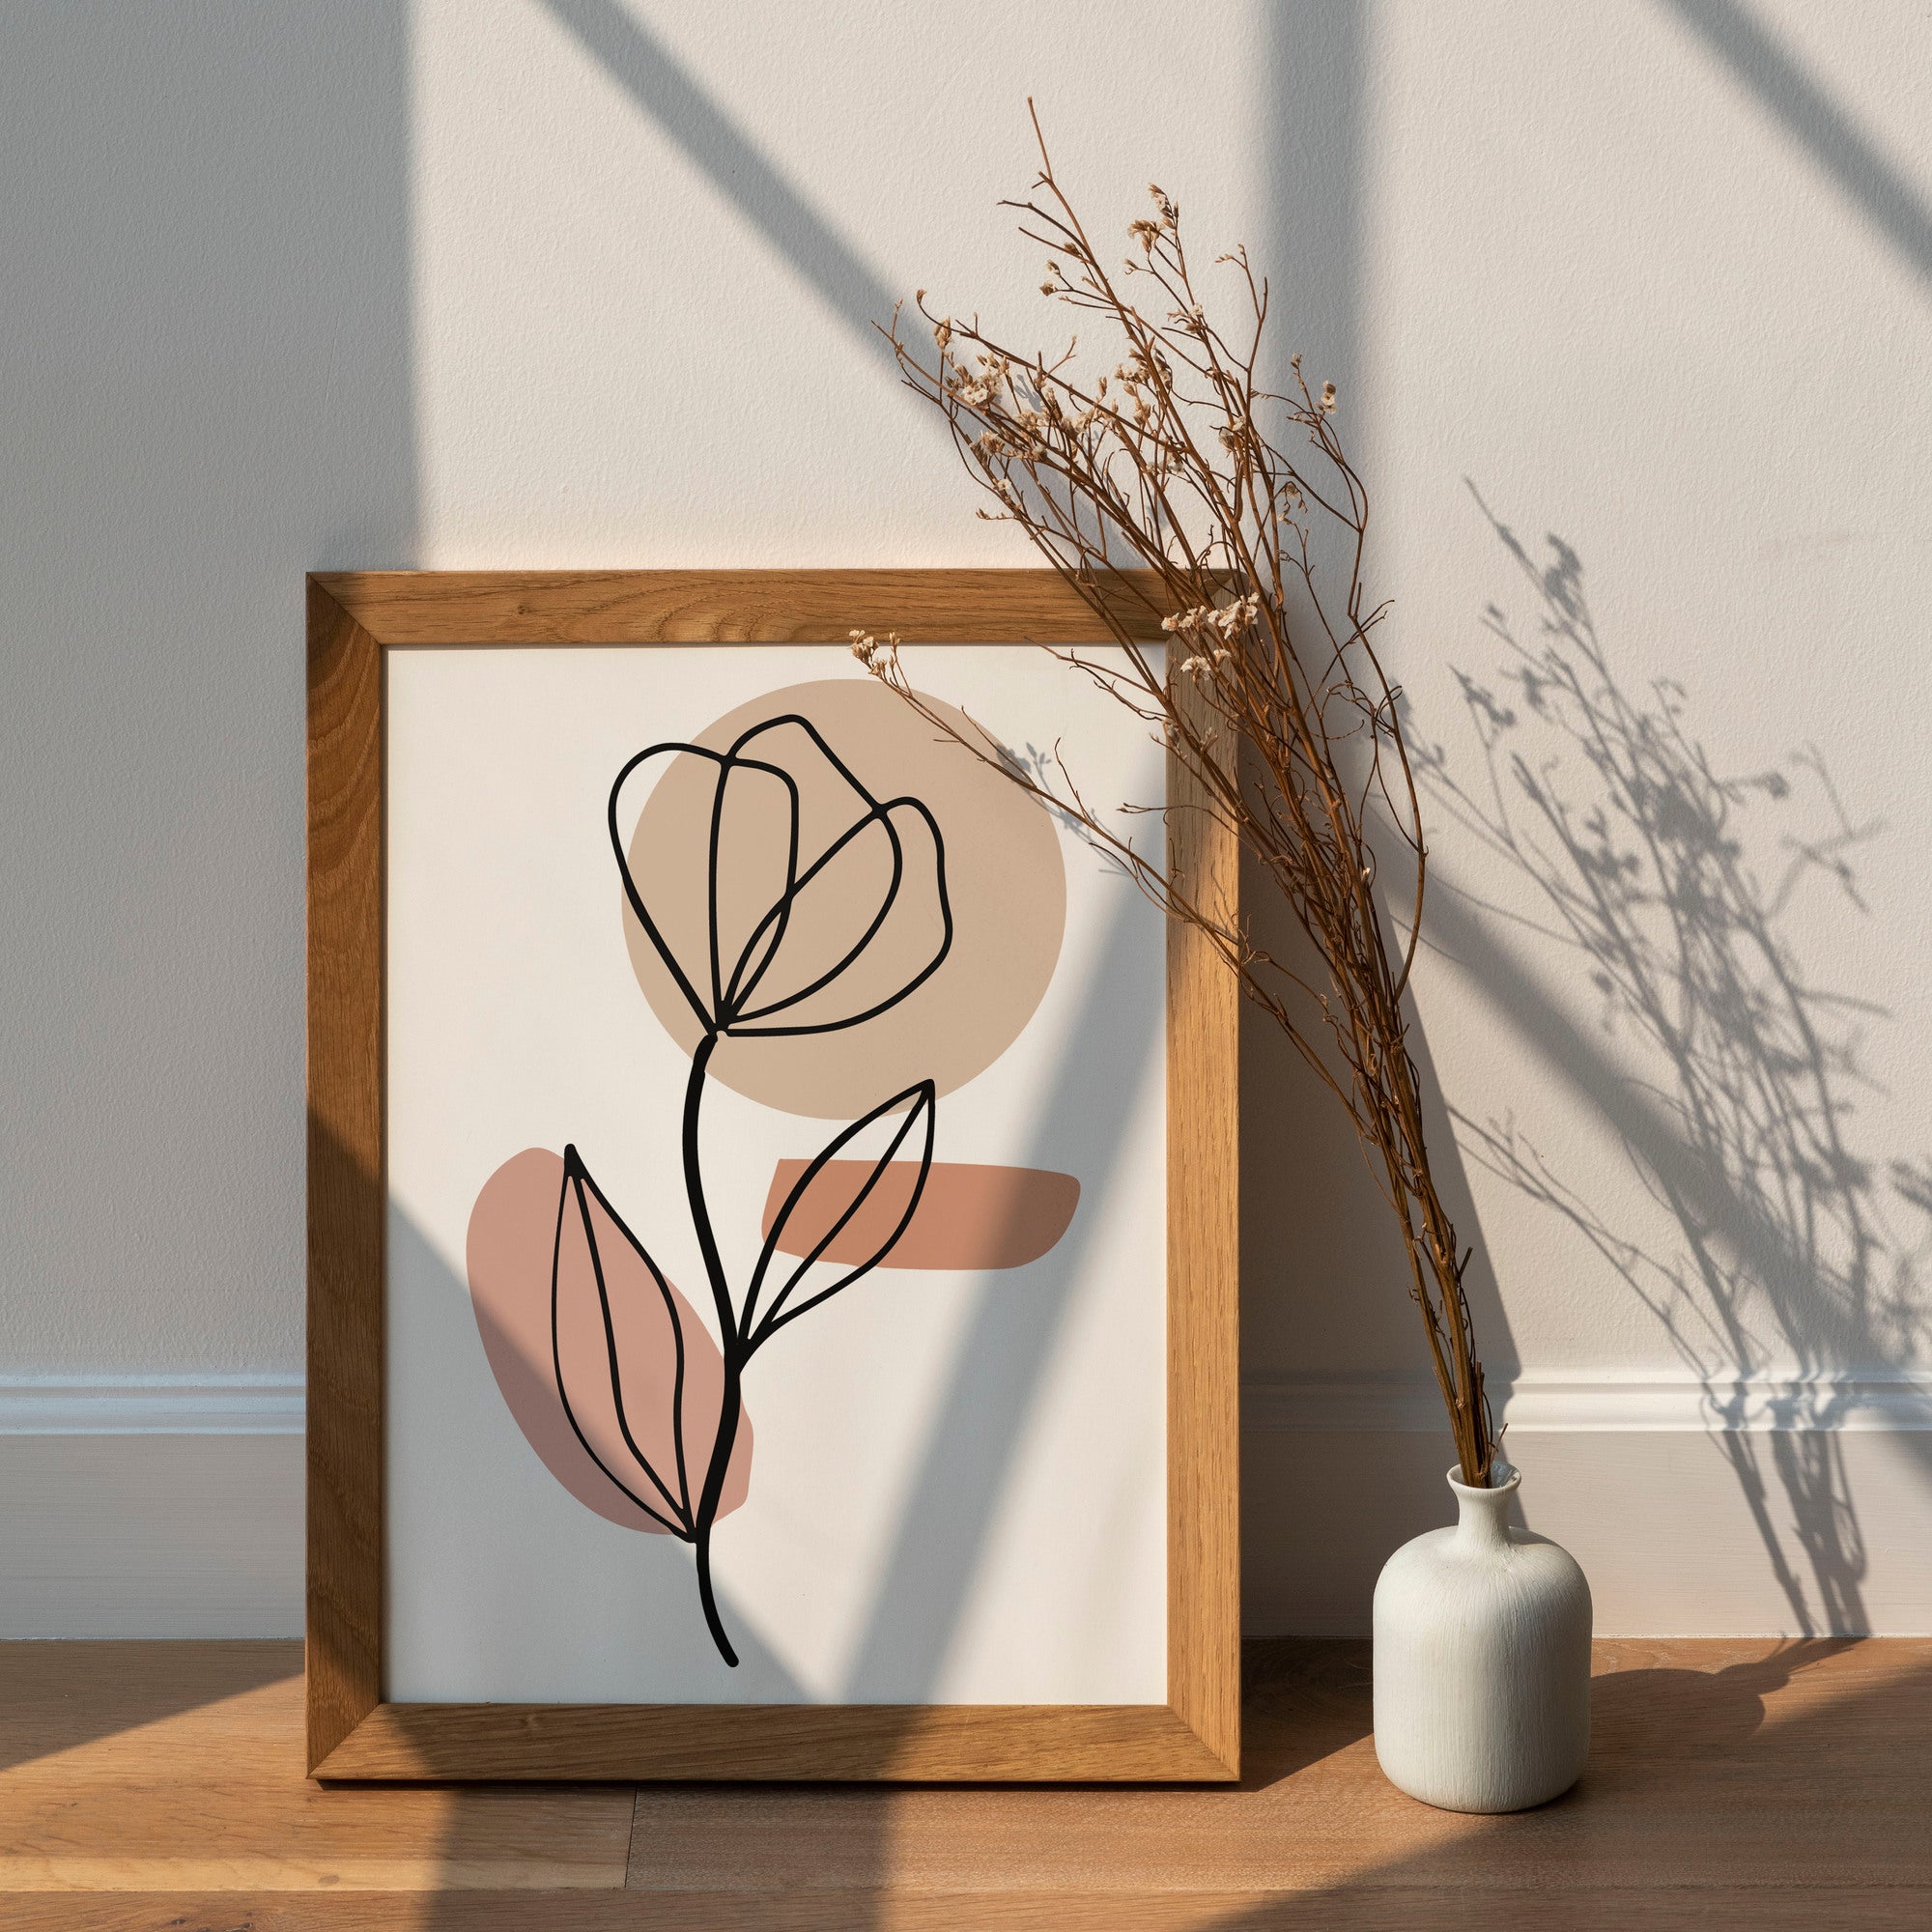 Abstract Flower Home Decoration | Canvas Digital Art | Wall Art